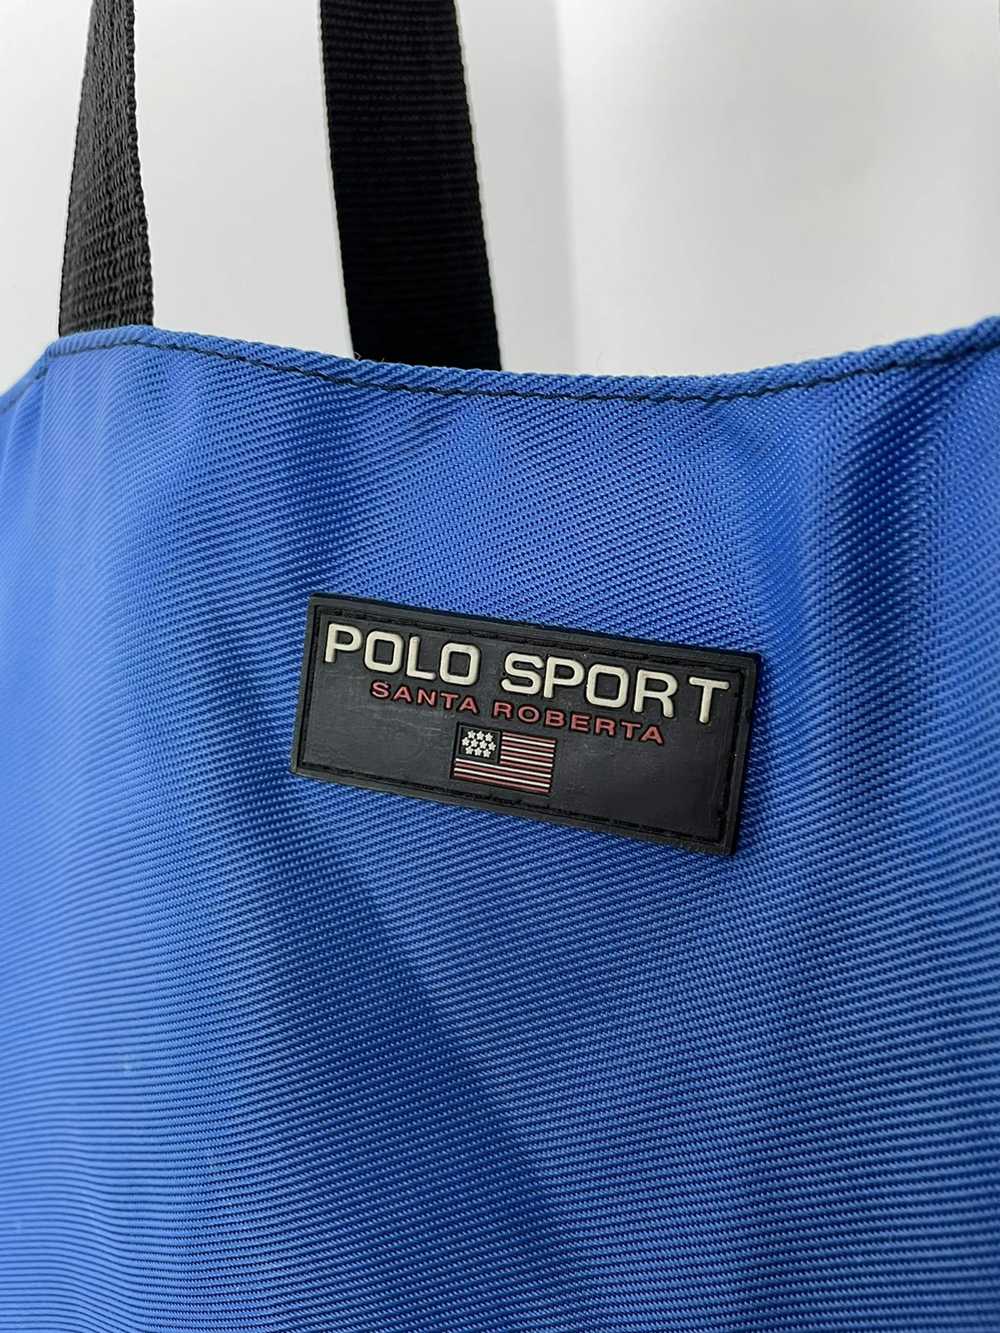 Polo Ralph Lauren Polo Sport Santa Roberta Bag - image 7